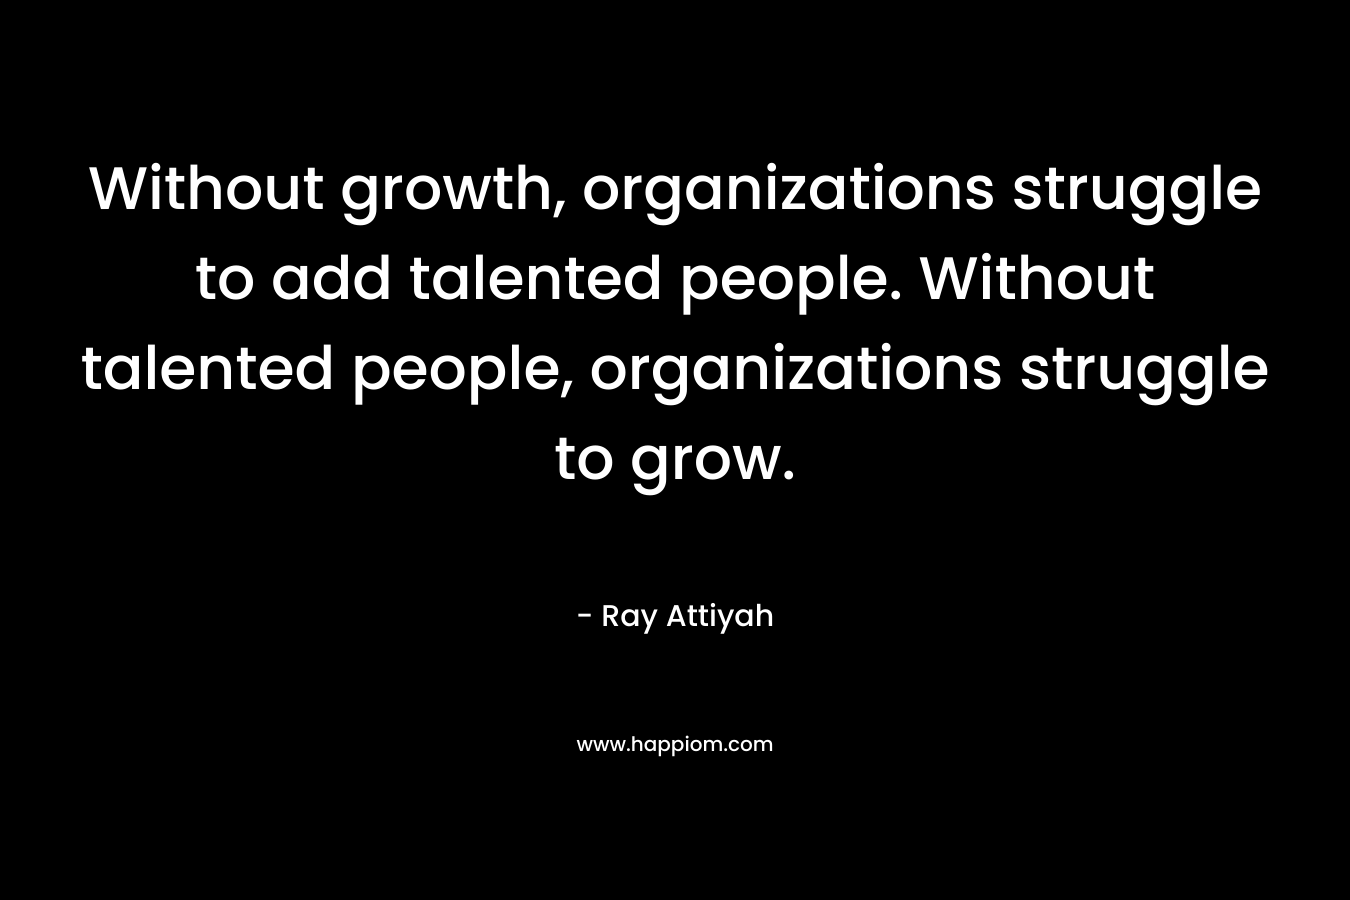 Without growth, organizations struggle to add talented people. Without talented people, organizations struggle to grow. – Ray Attiyah